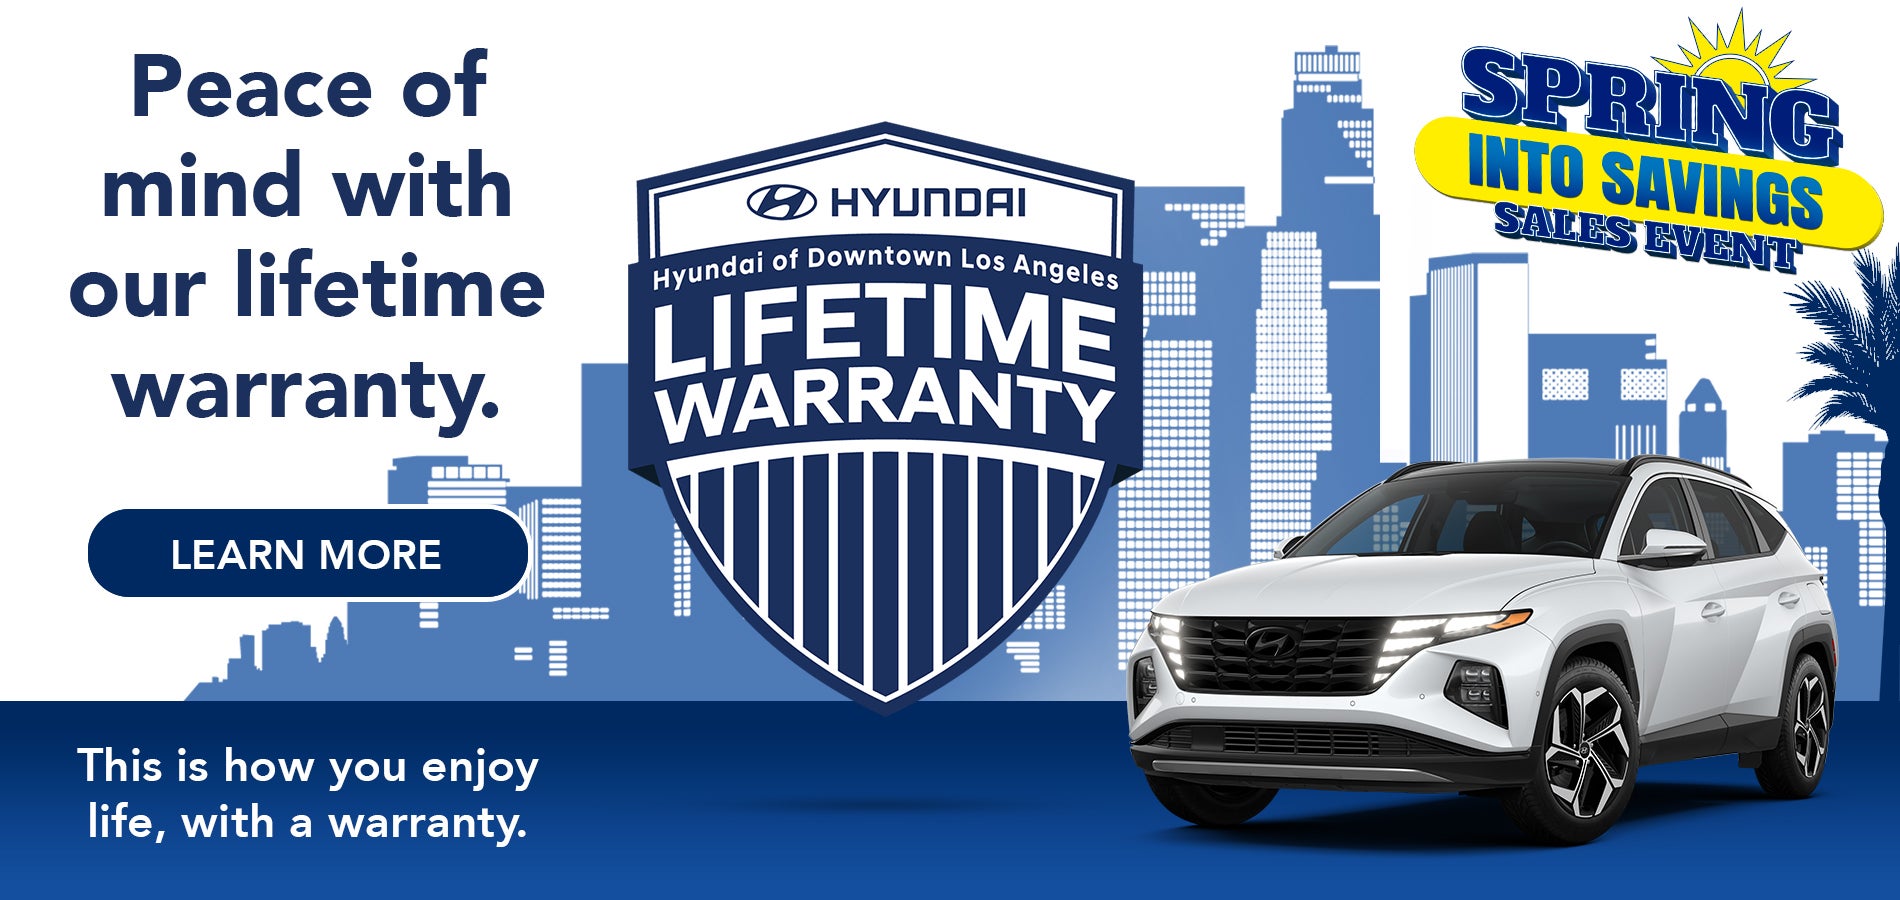 Lifetime Warranty available at Hyundai DTLA